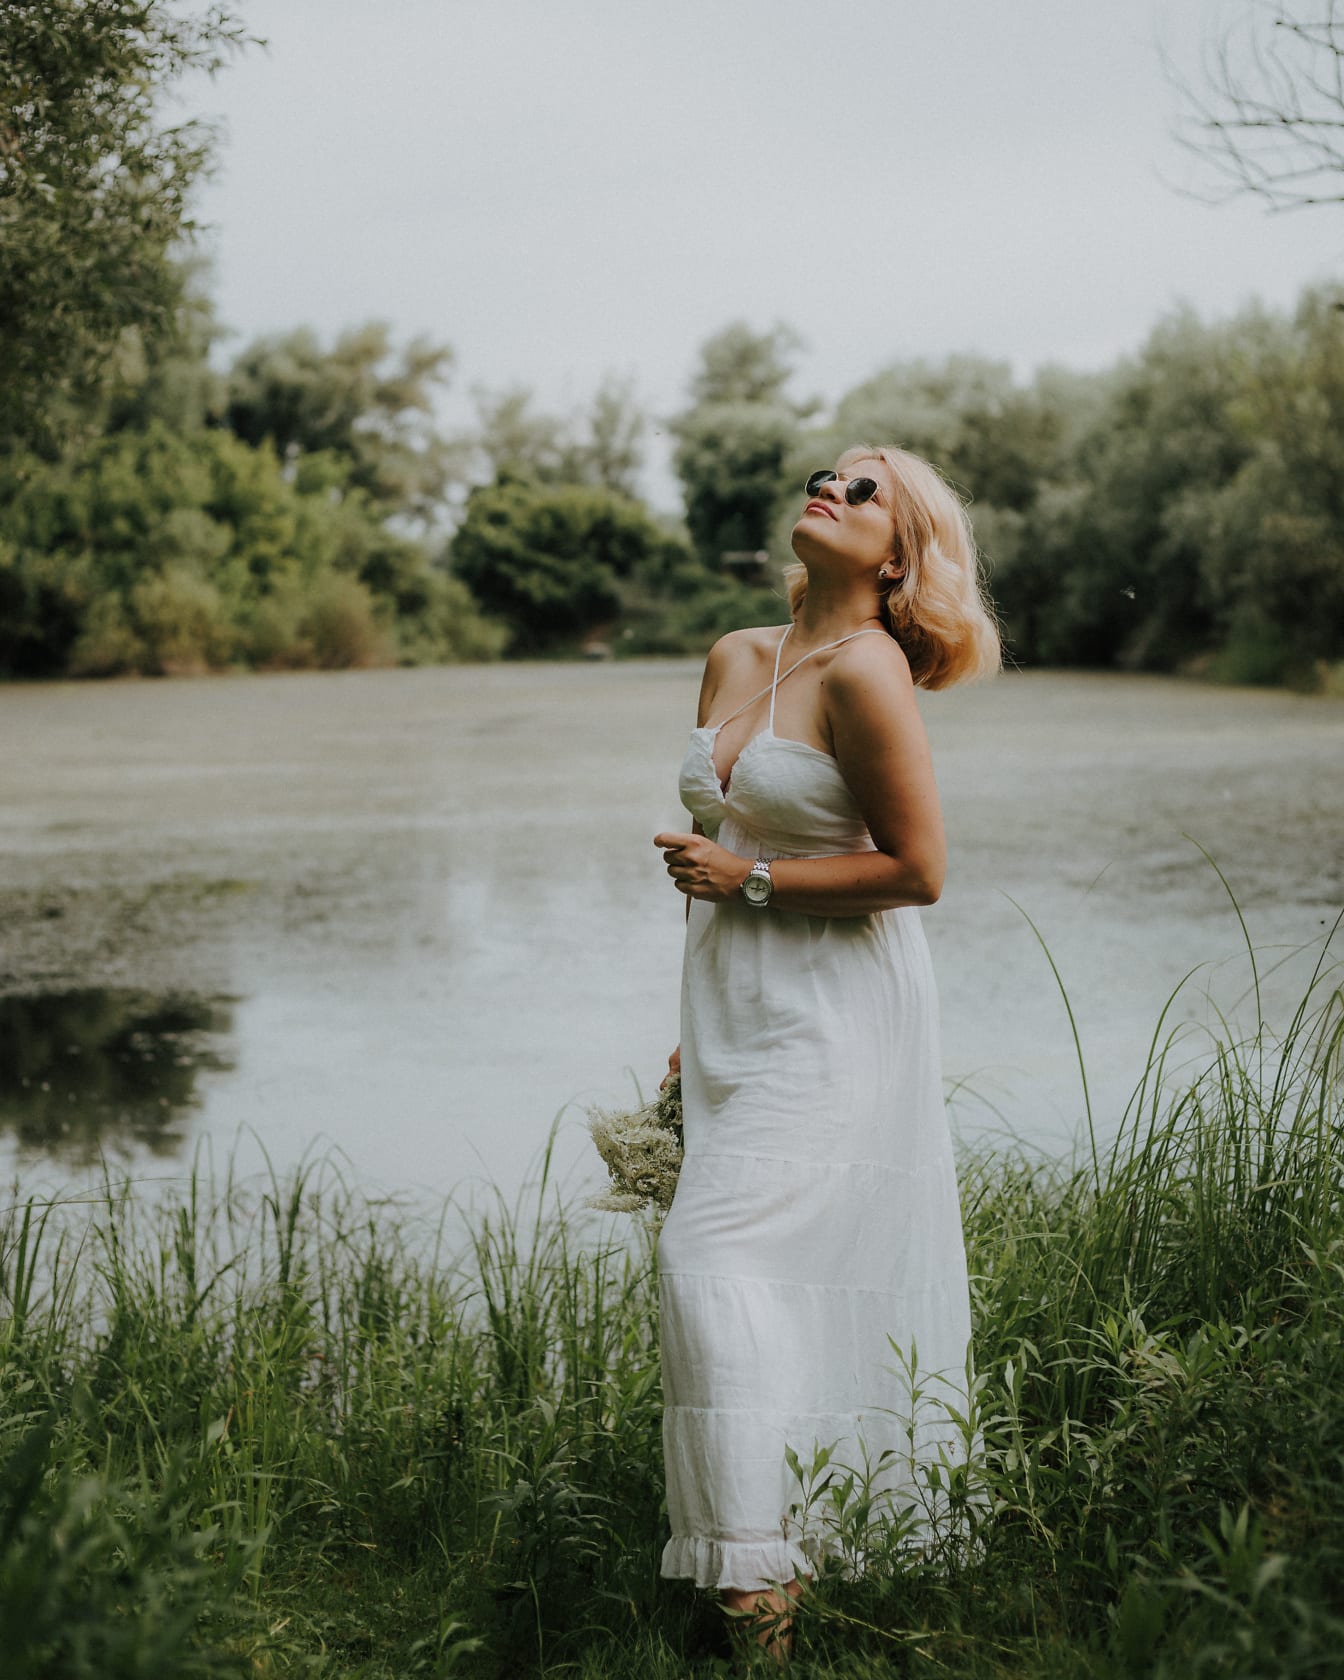 Wanita bangga berpose dalam gaun putih feminin berdiri di tepi danau